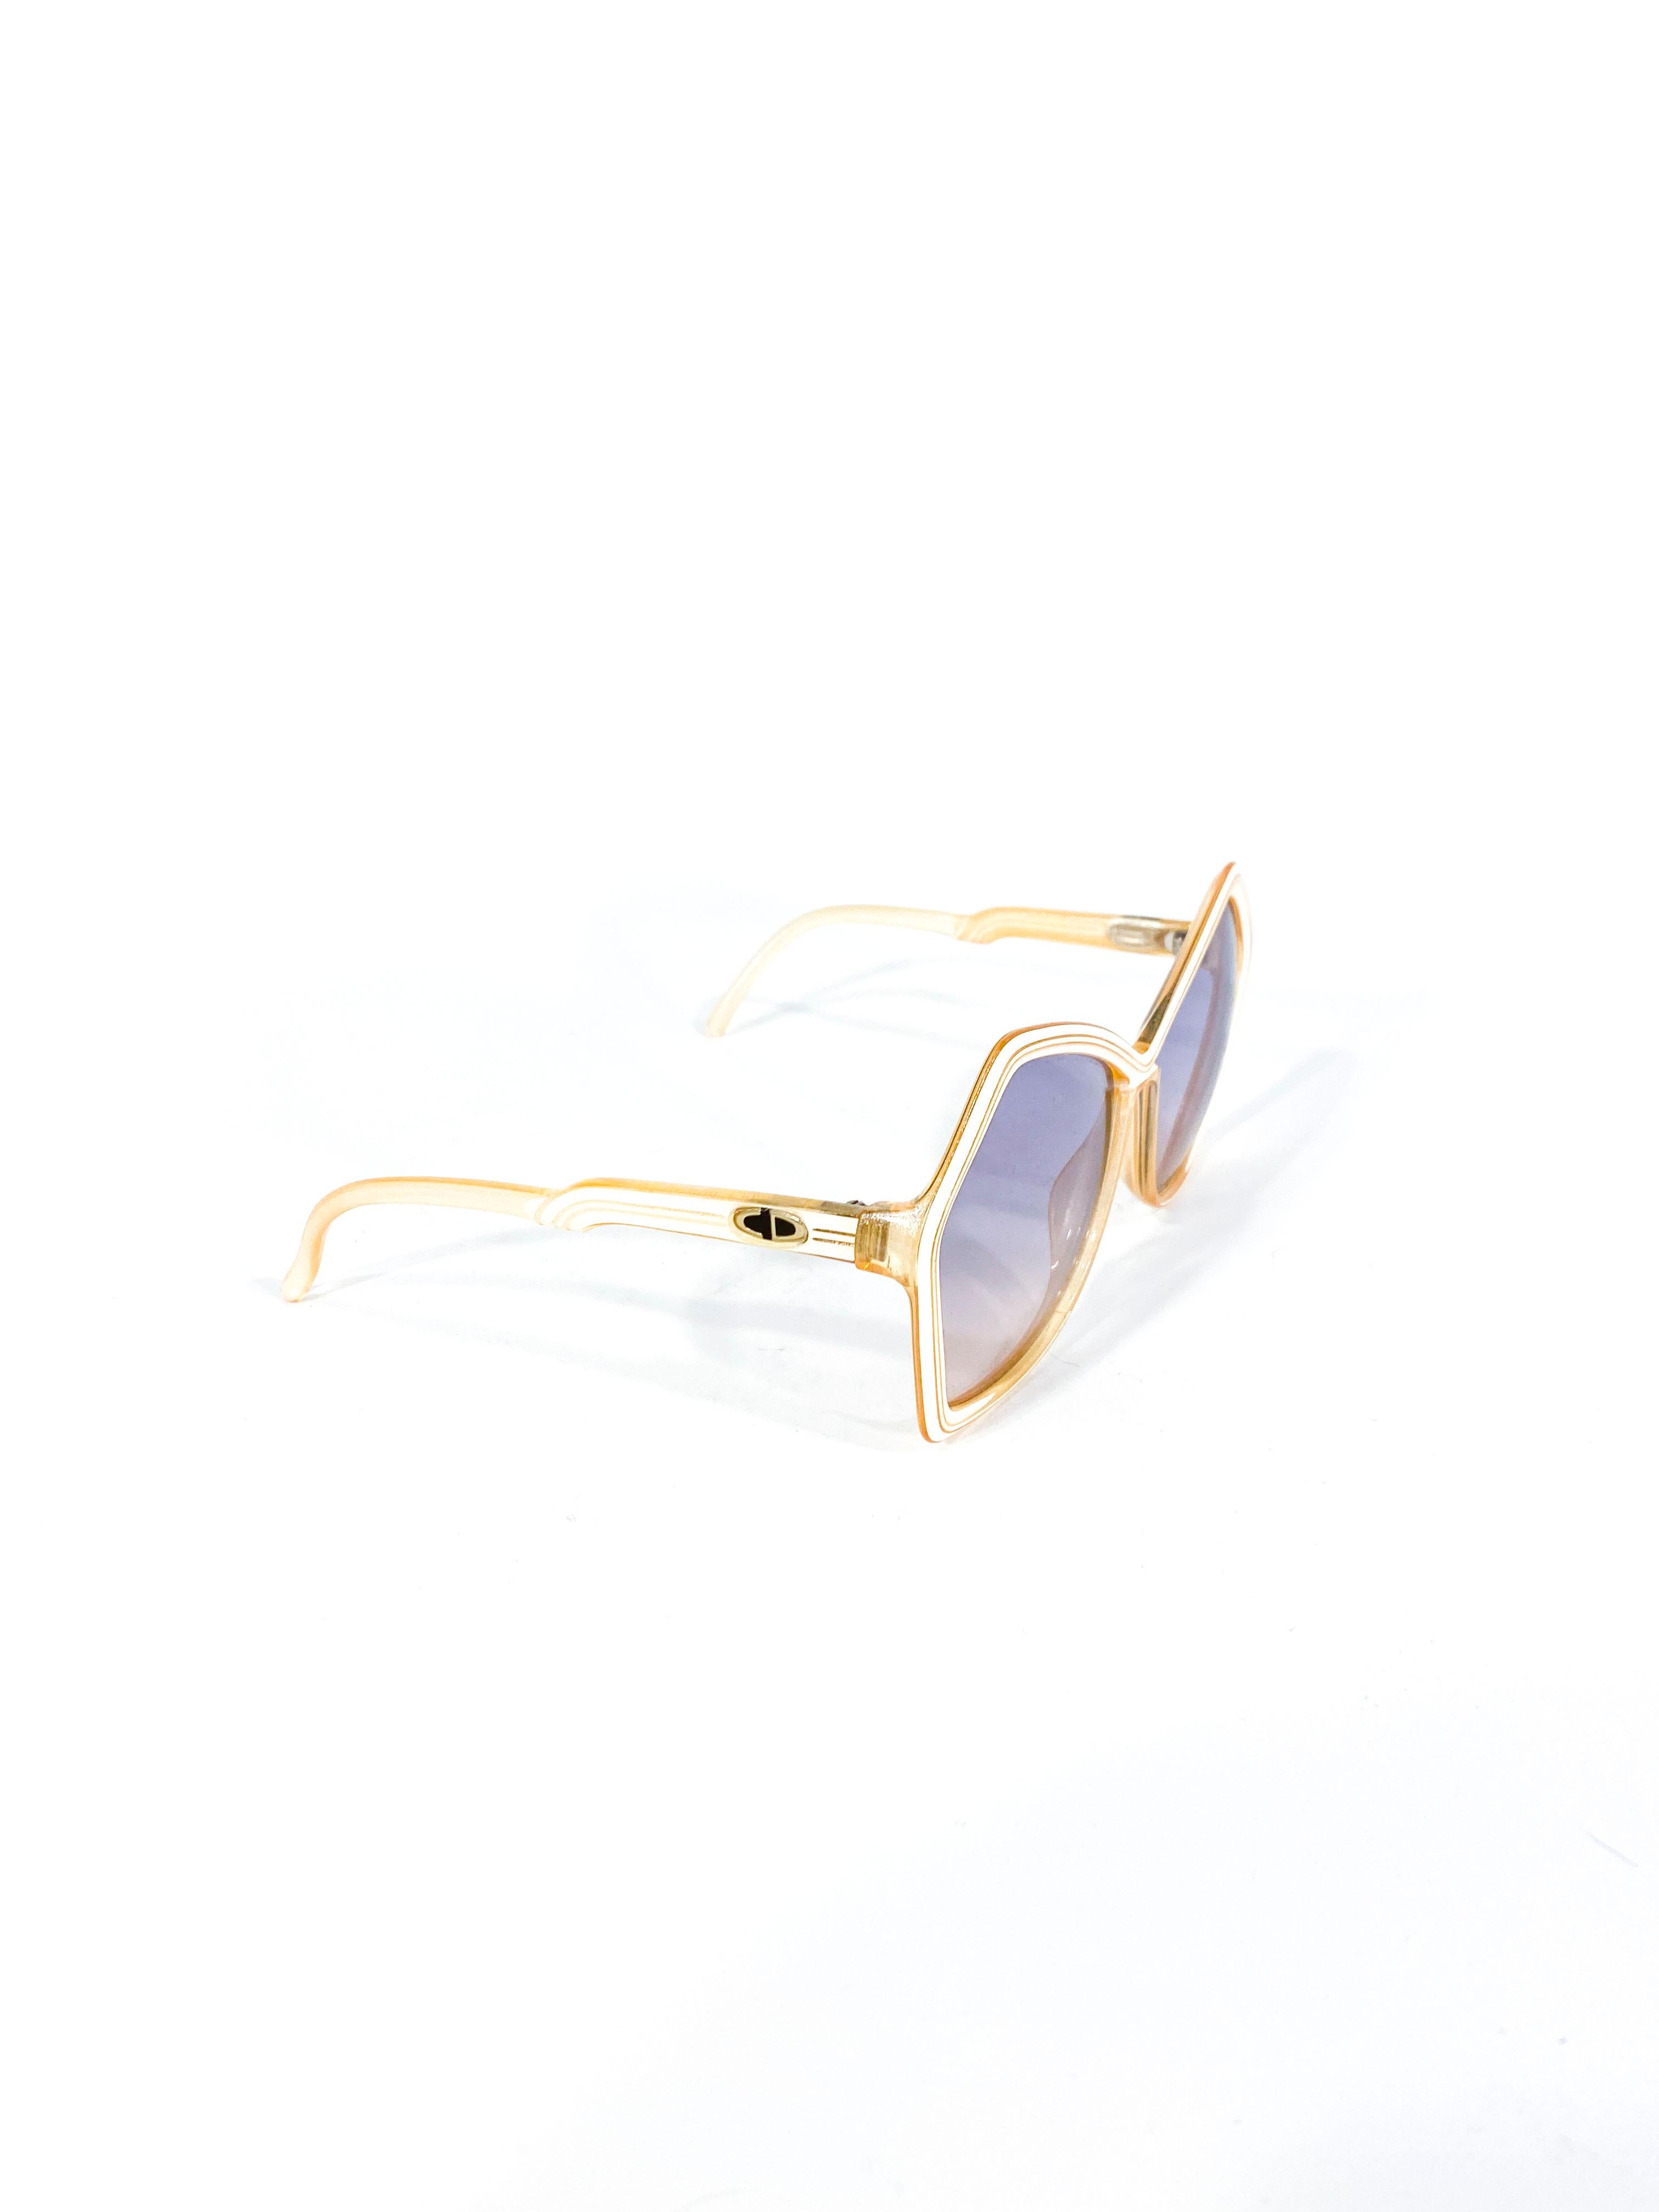 1970s dior sunglasses